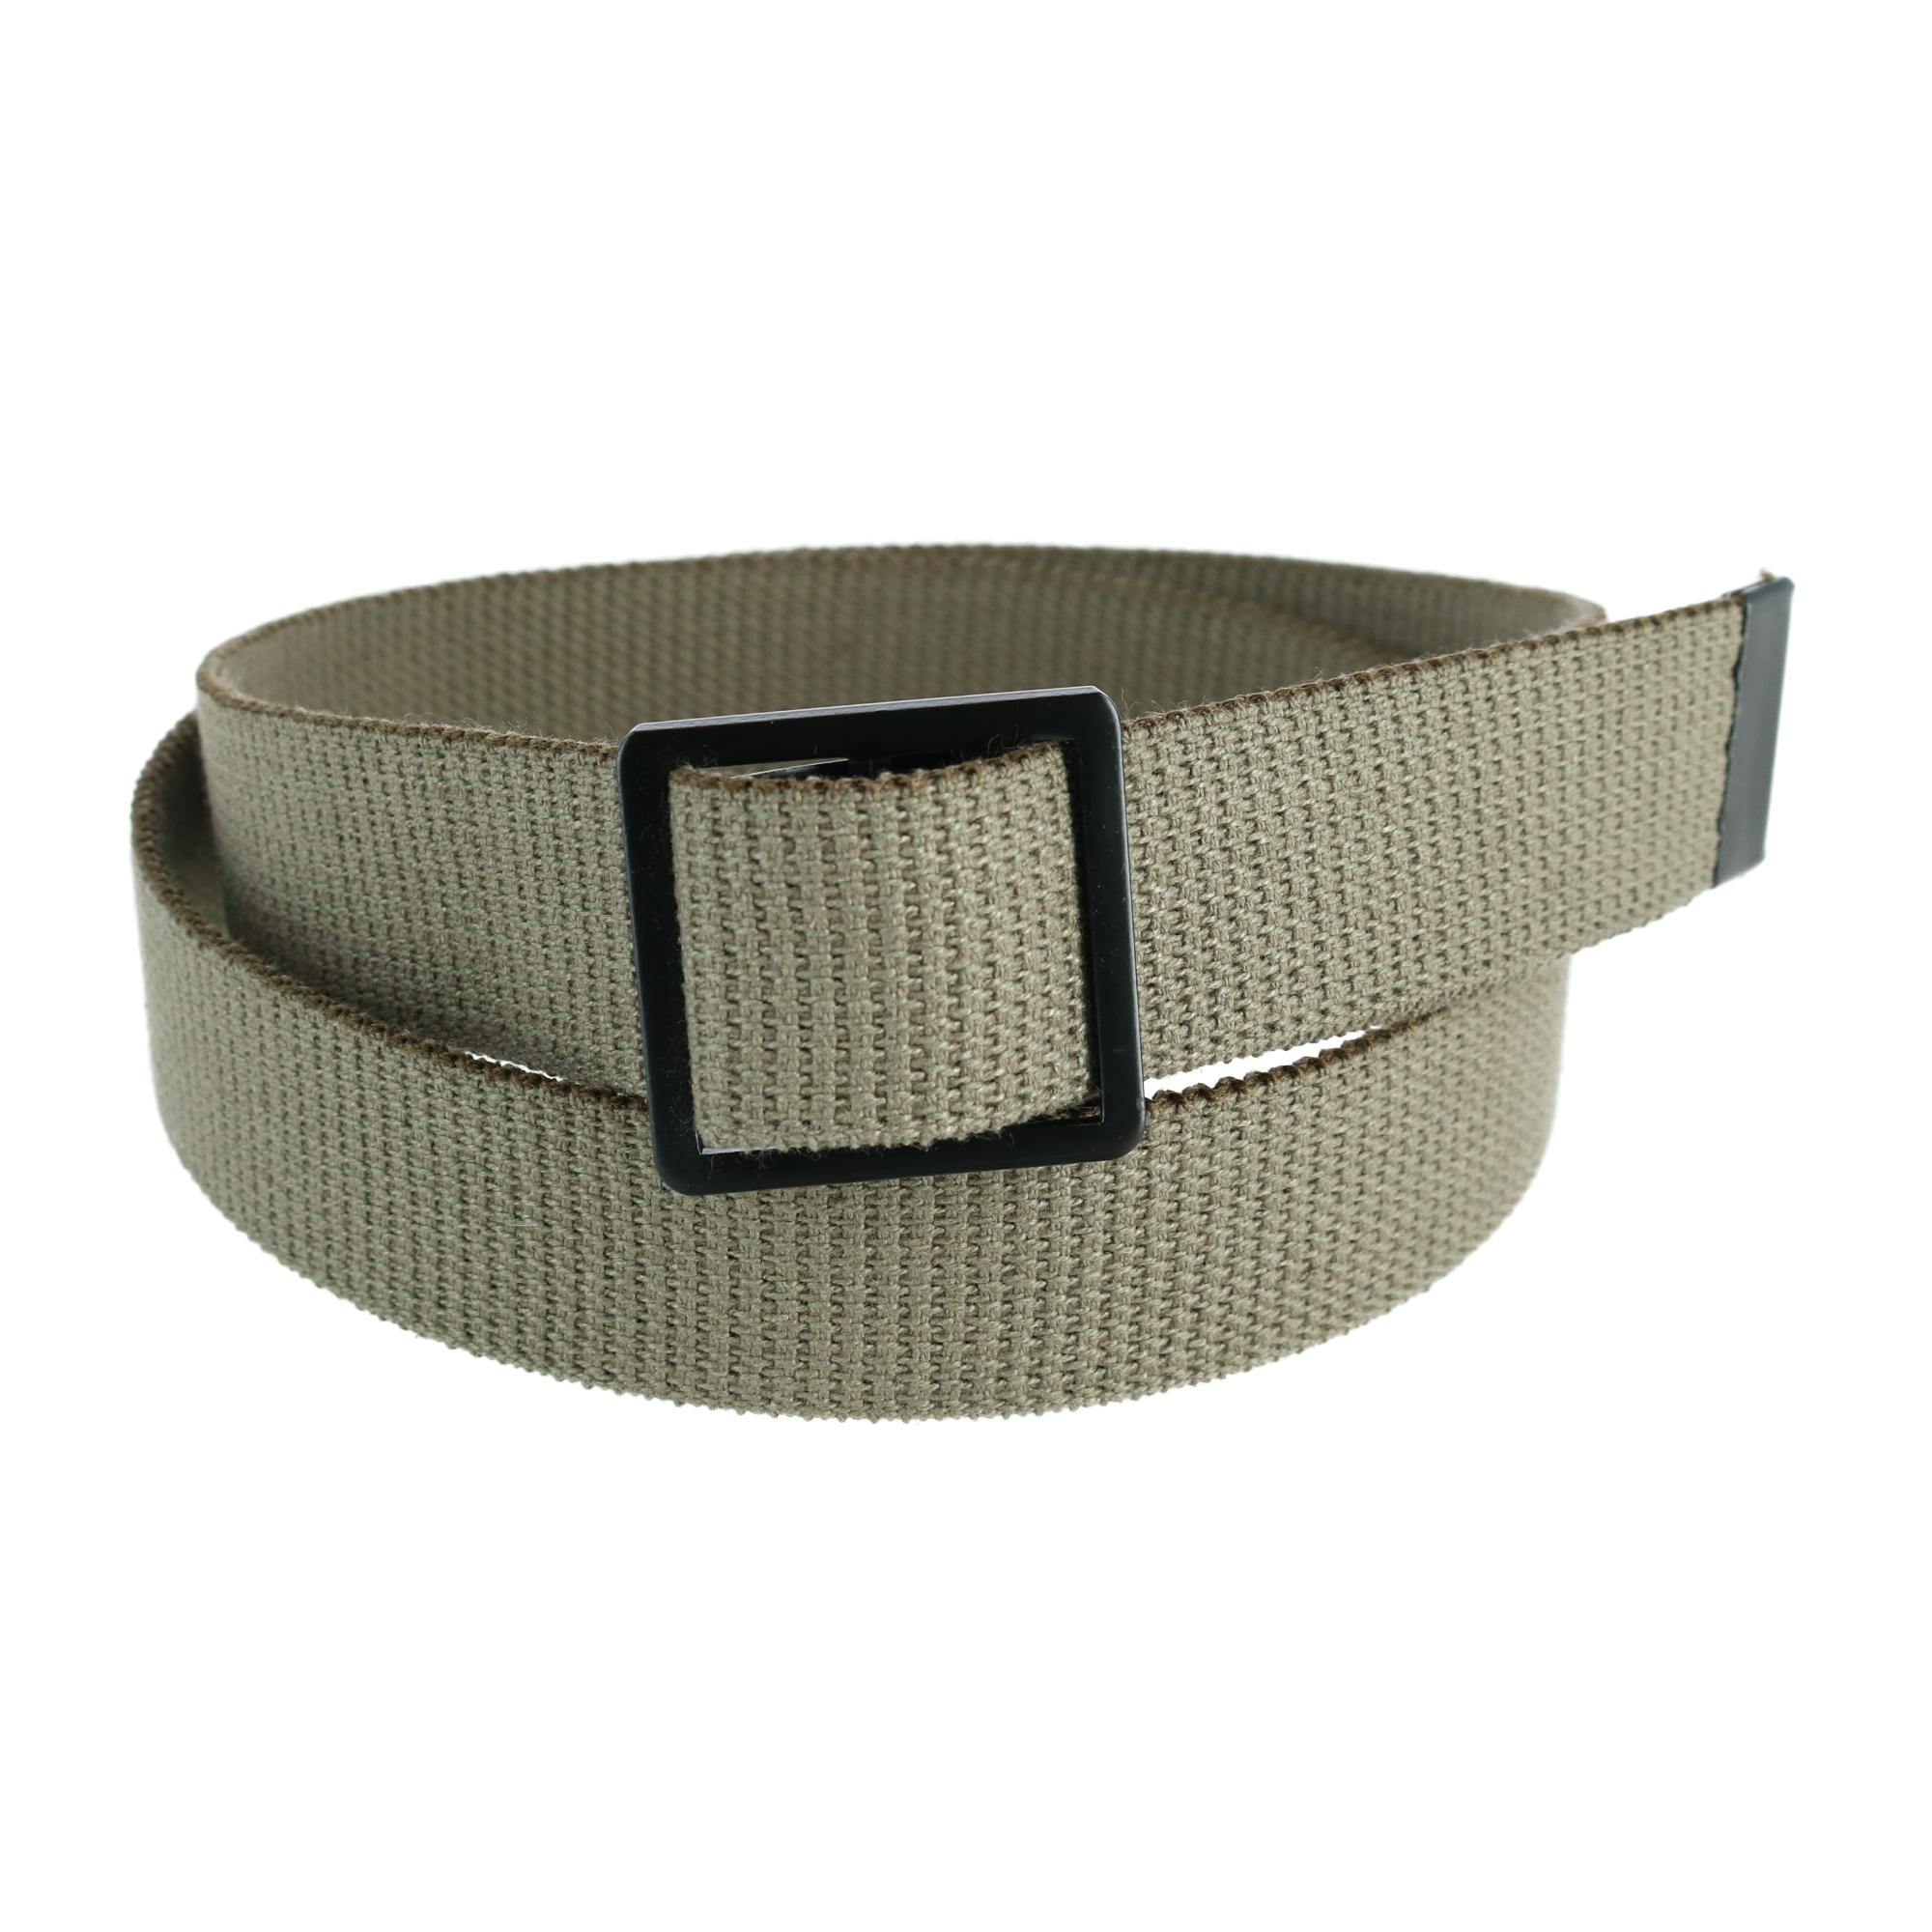 CTM Men's Military Grade Belt with Open Face Buckle